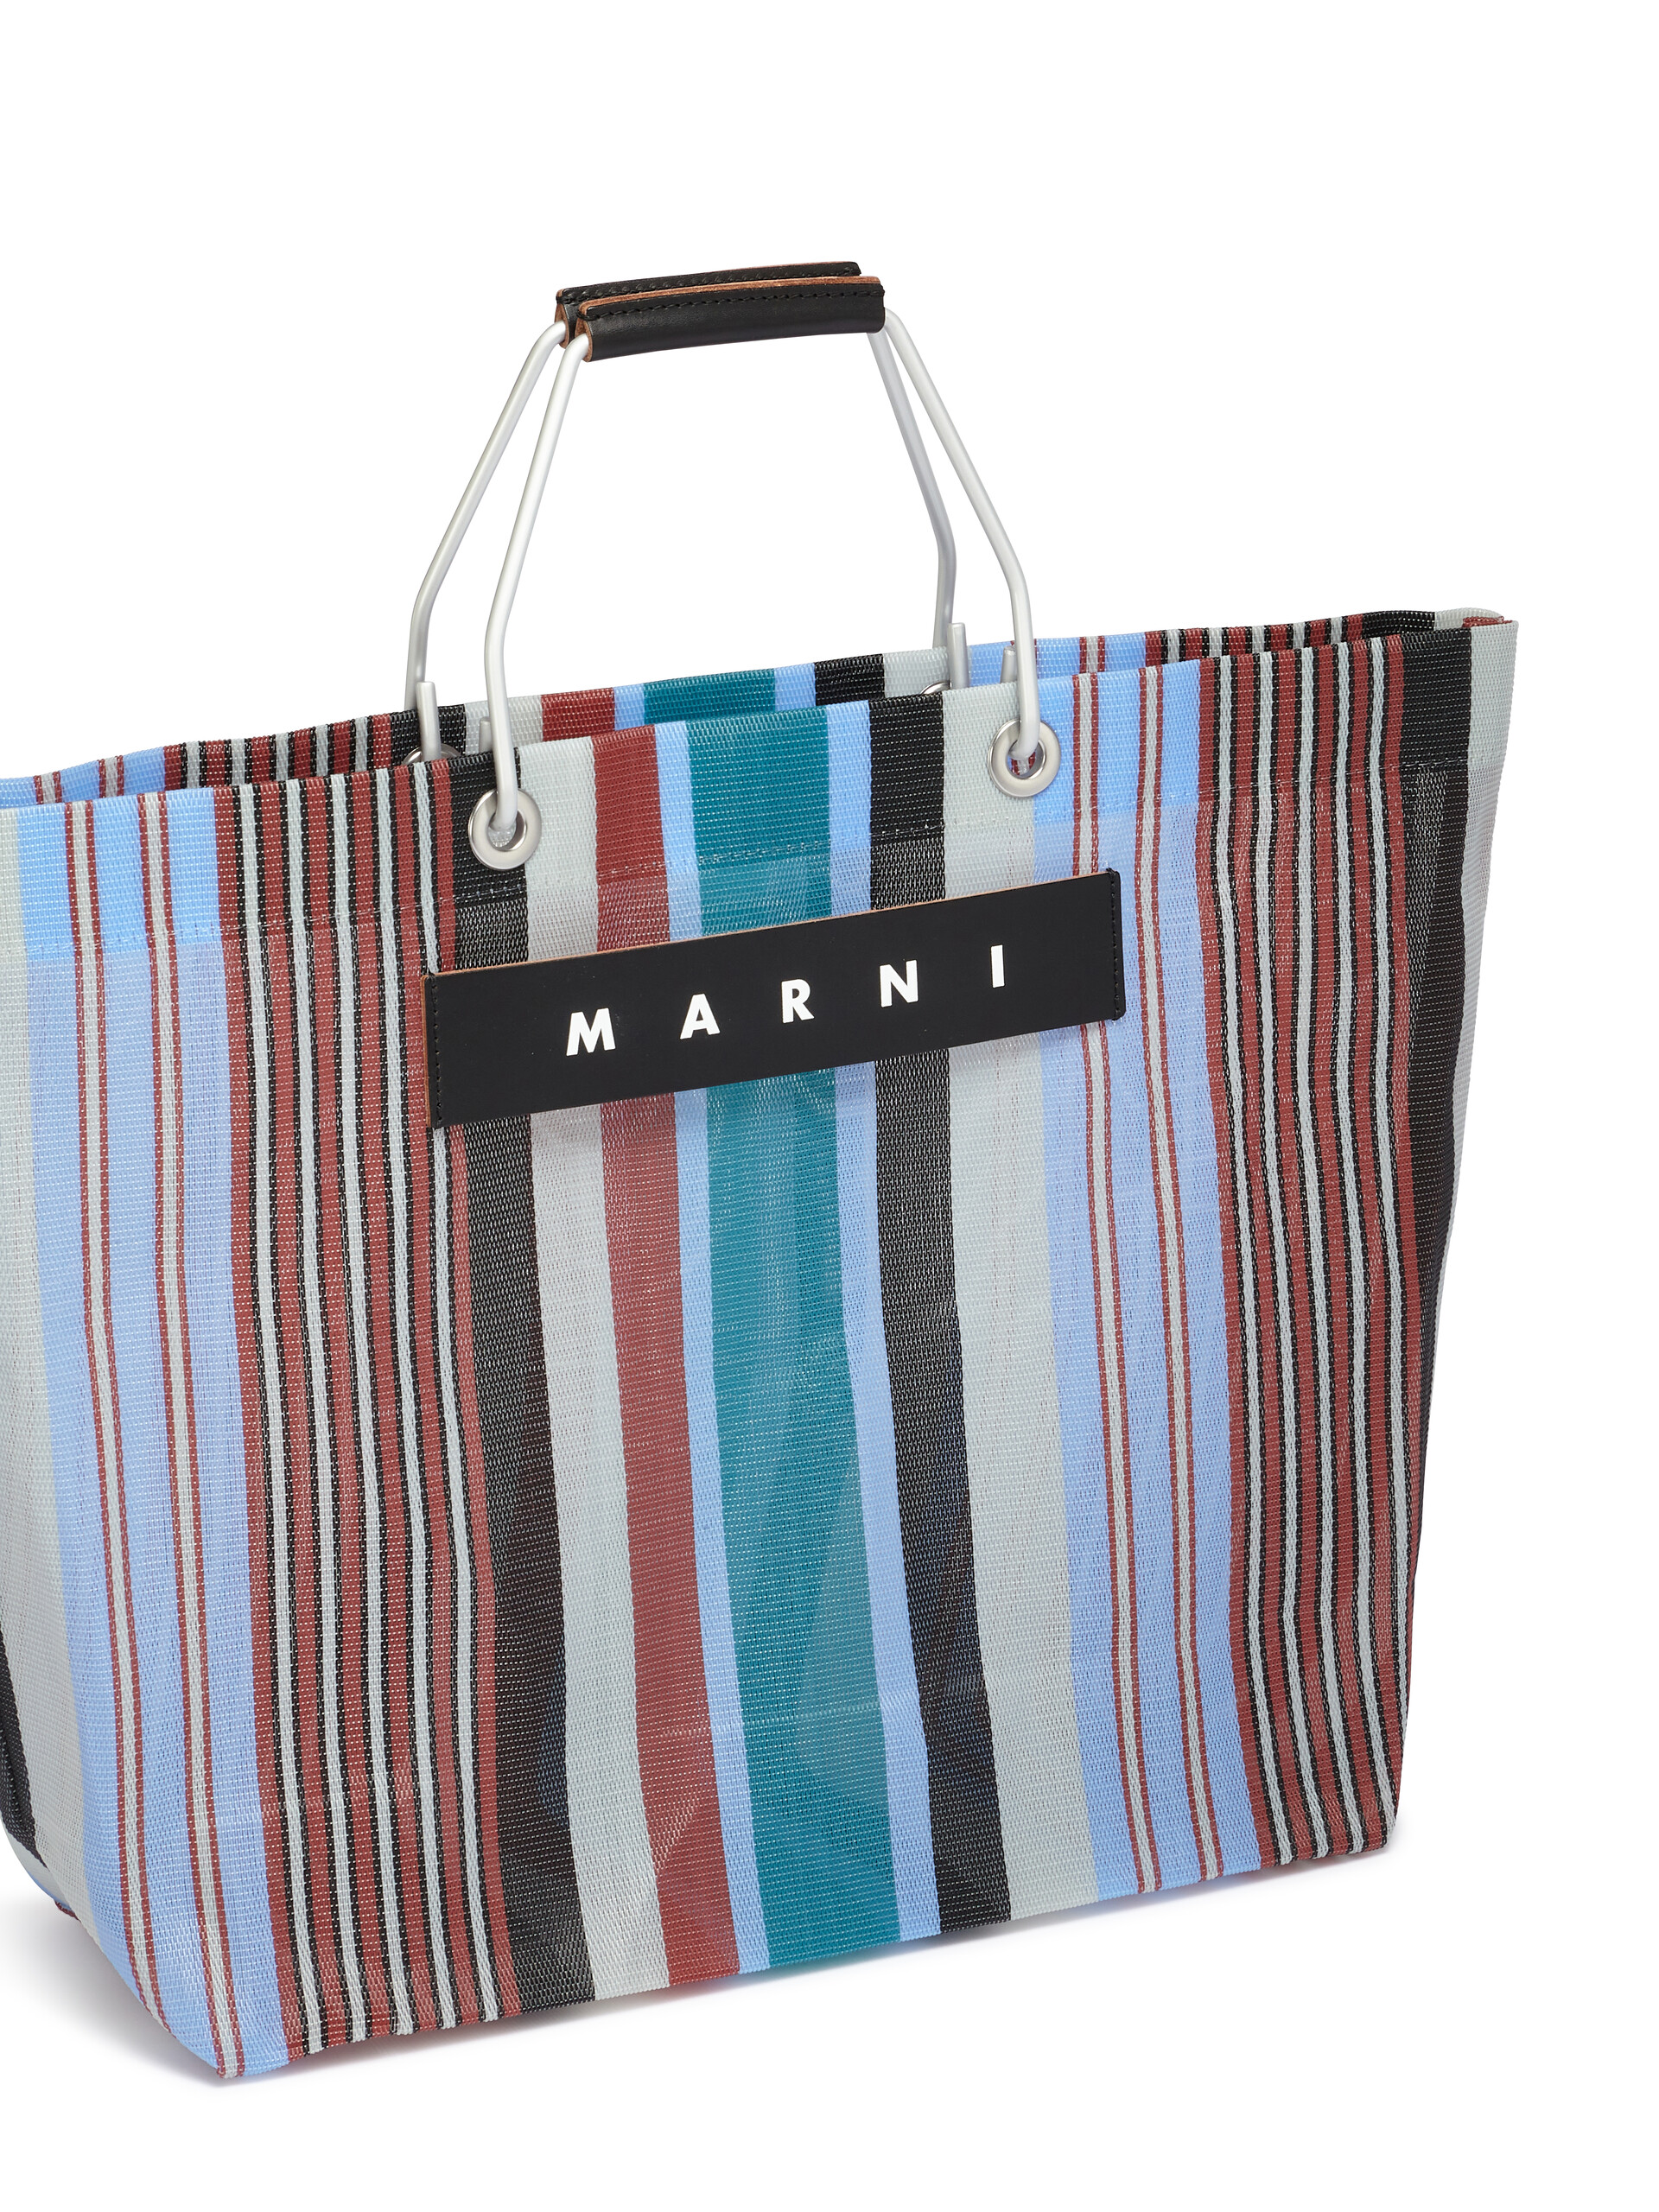 MARNI MARKET STRIPE multicolor blue bag - Shopping Bags - Image 4